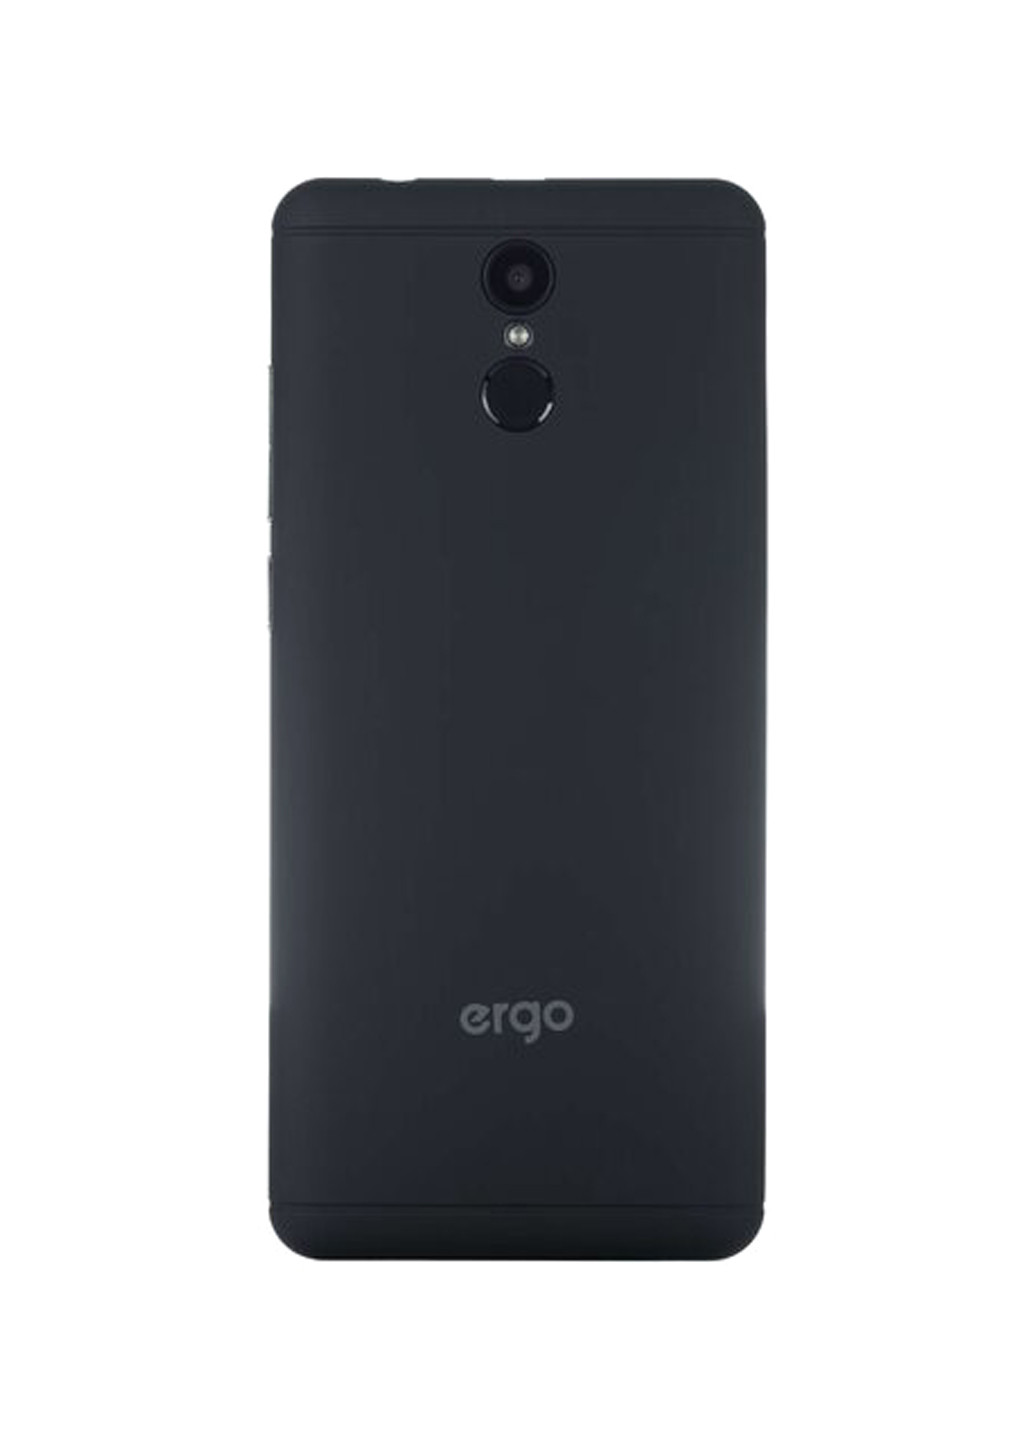 Смартфон Ergo v550 vision 2/16gb black (133442601)